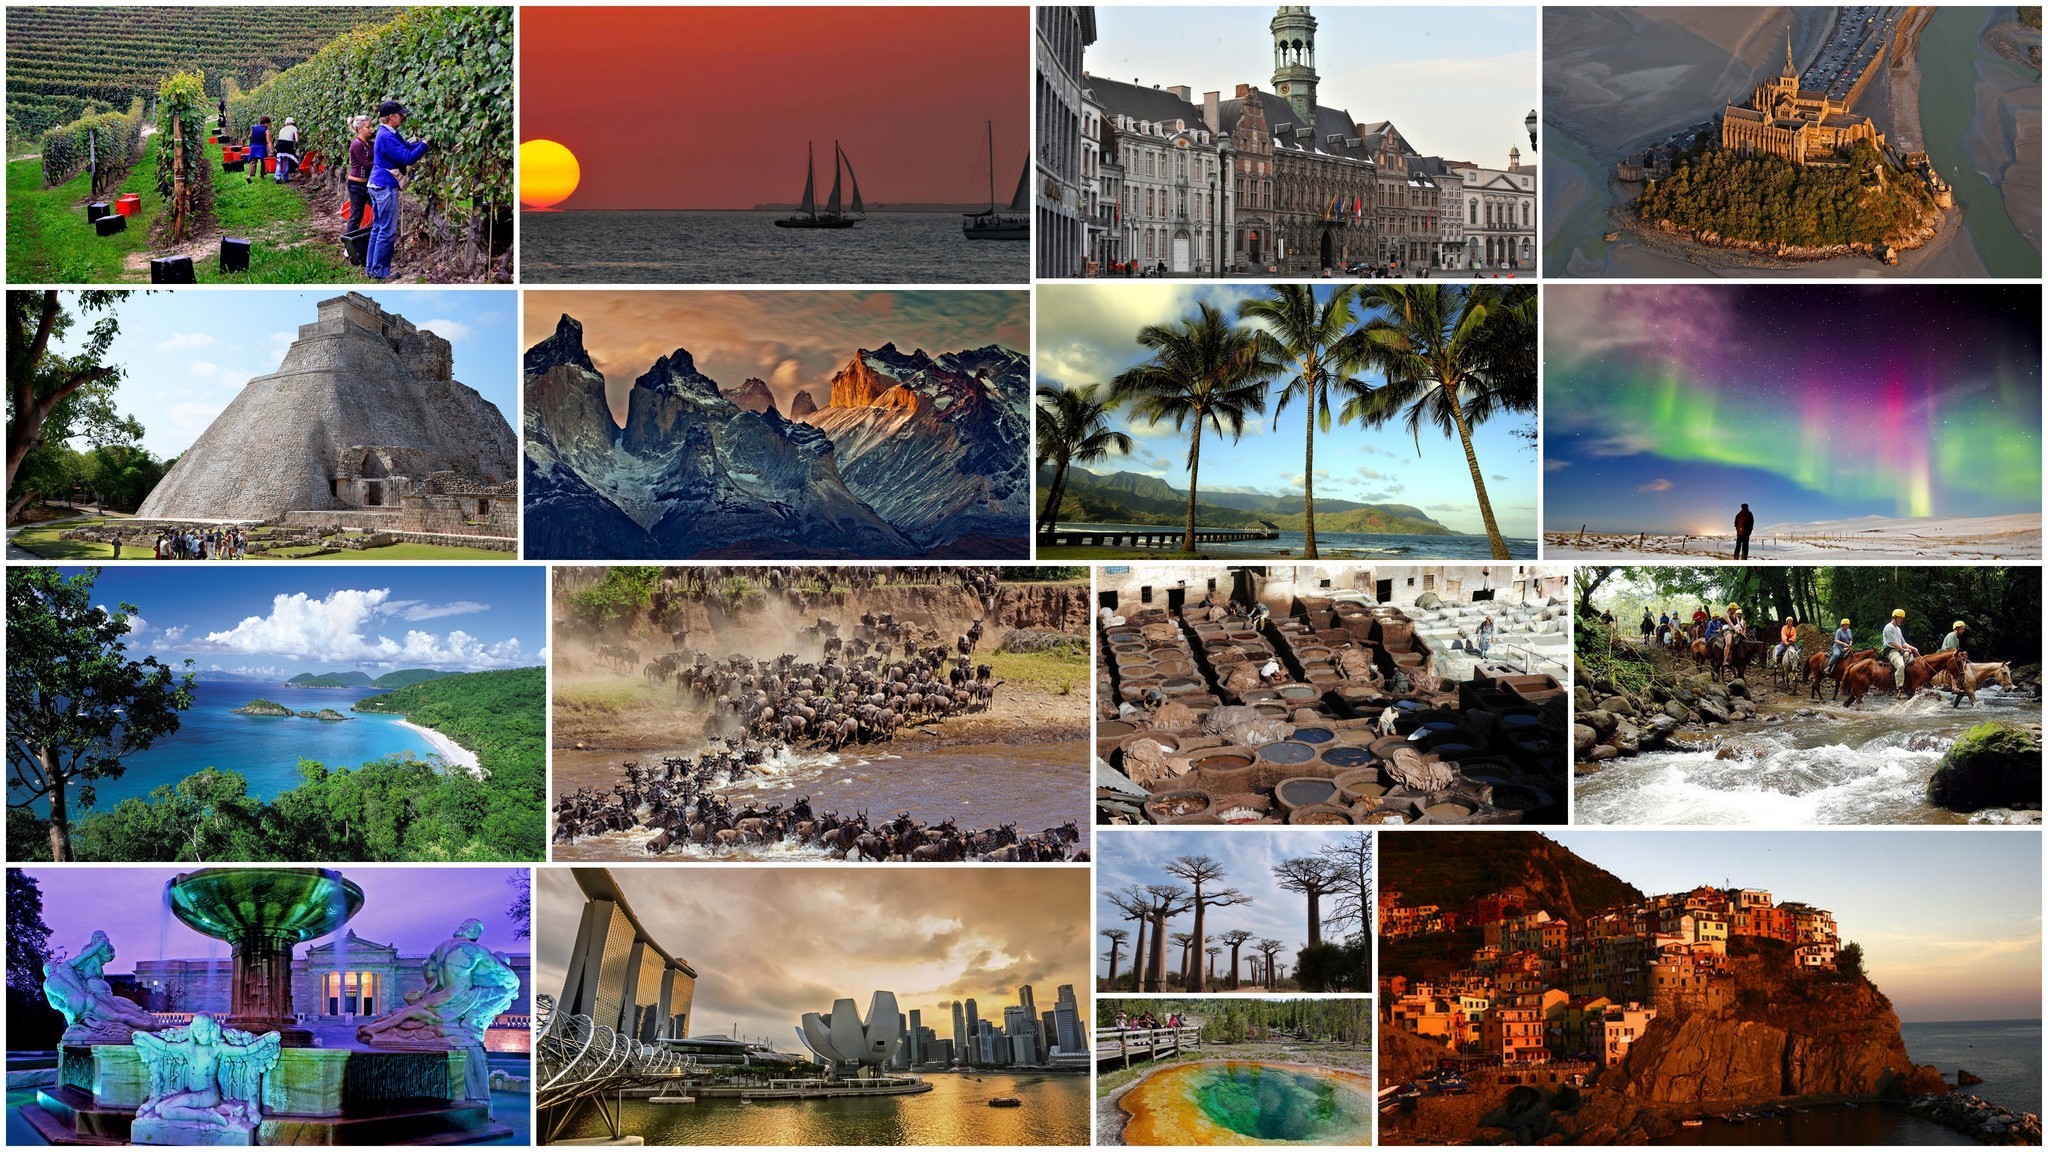 41 travel destinations for 2015 - Chicago Tribune